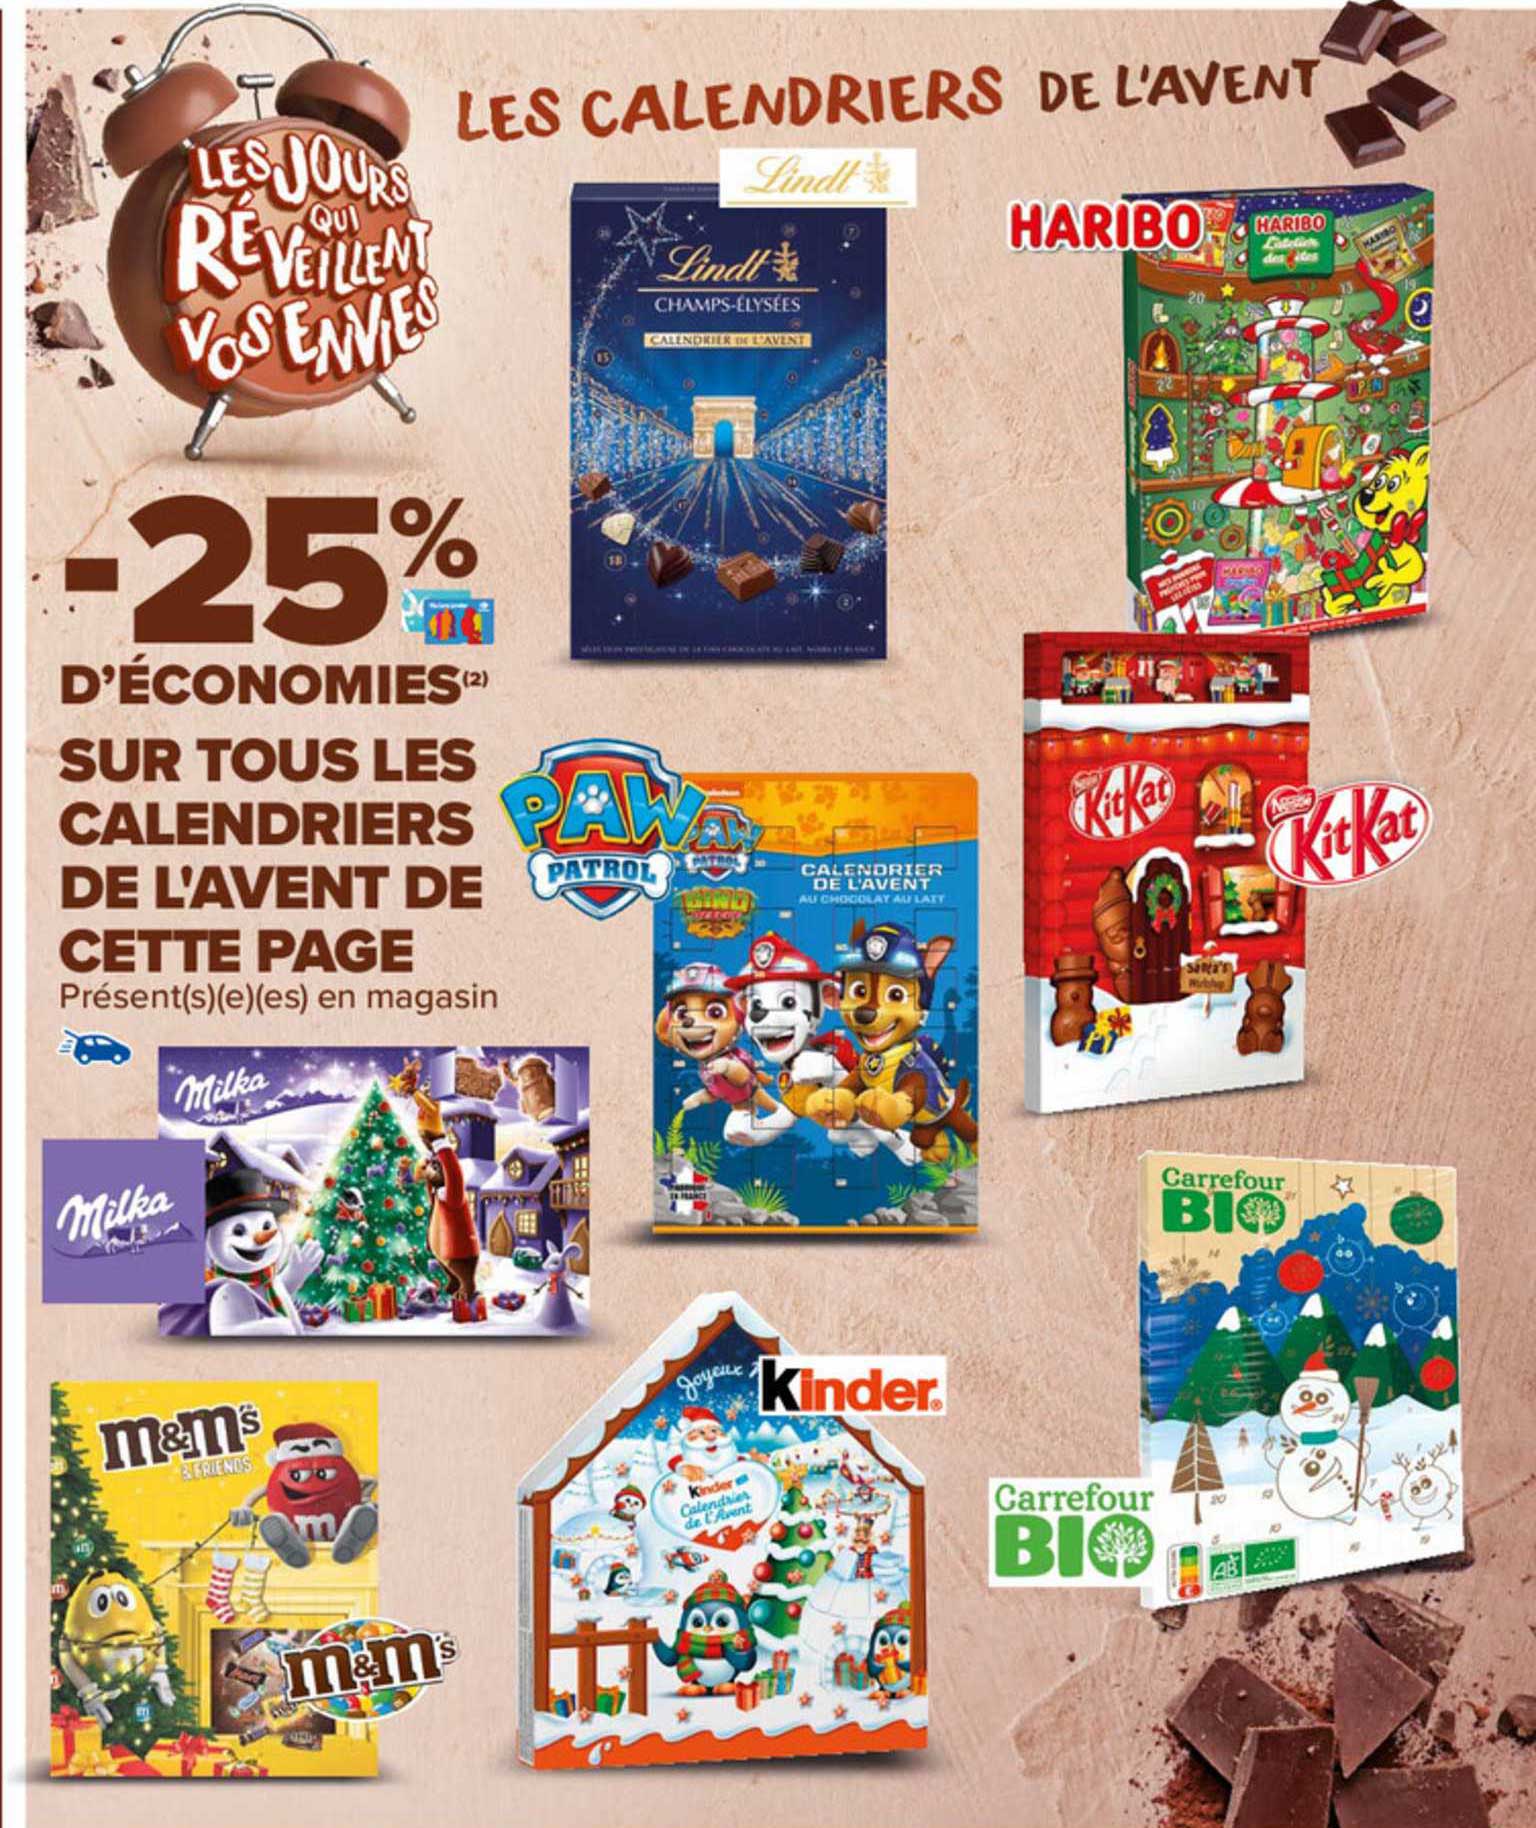 Promo Calendrier De L'Avent Haribo chez Carrefour Express